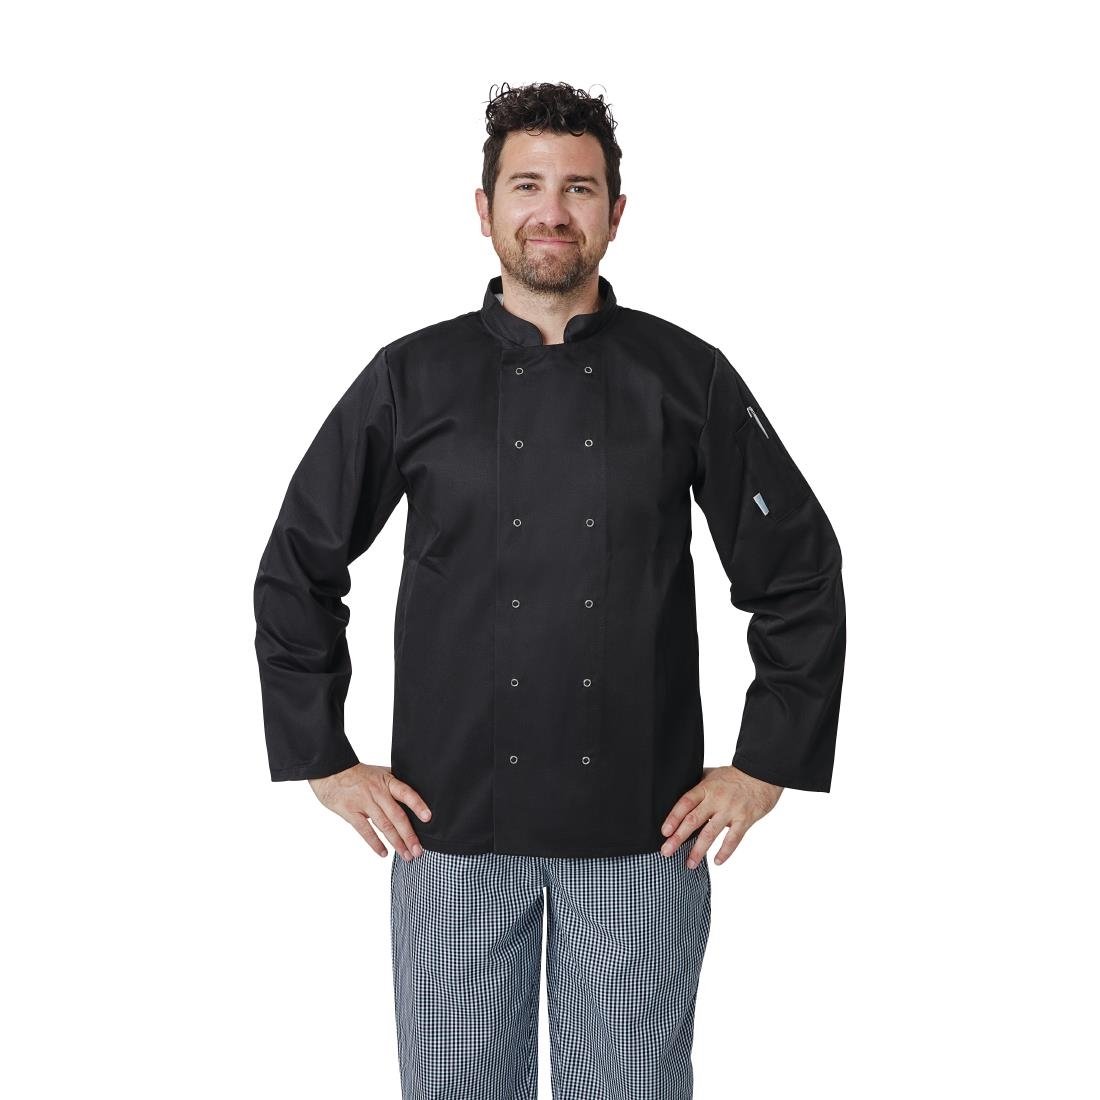 A438-S Whites Vegas Unisex Chefs Jacket Long Sleeve Black S JD Catering Equipment Solutions Ltd